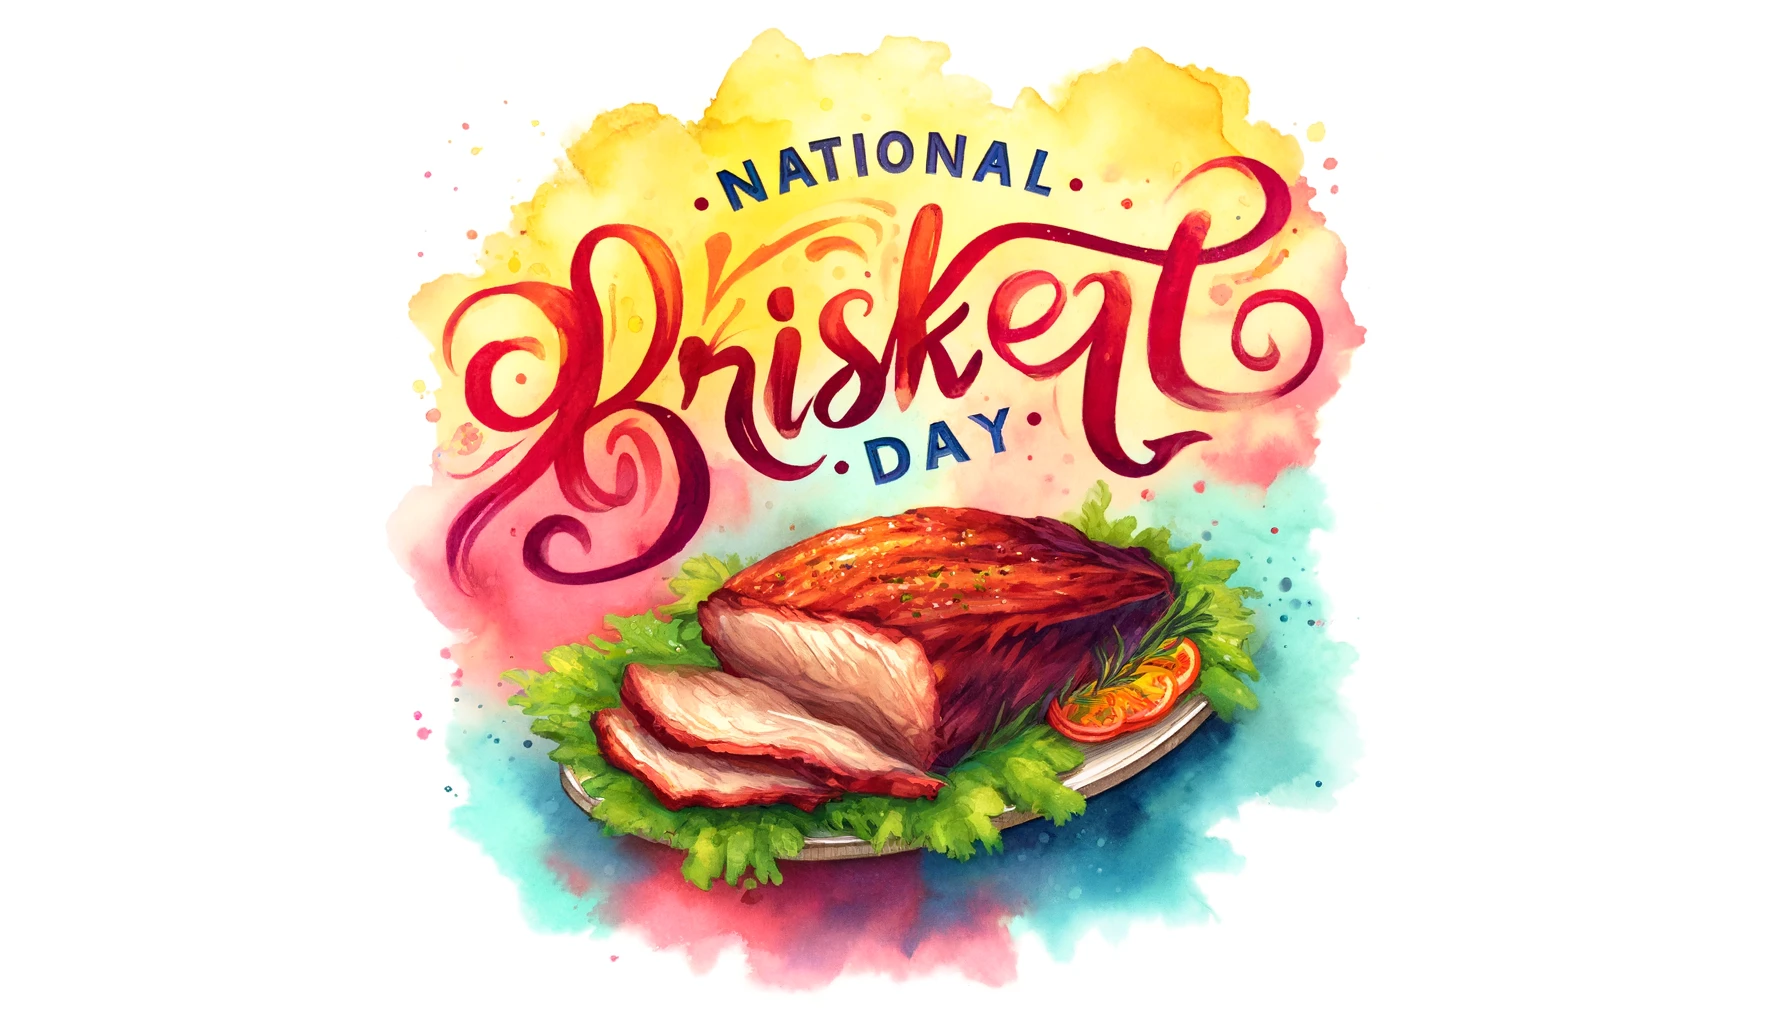 National Brisket Day